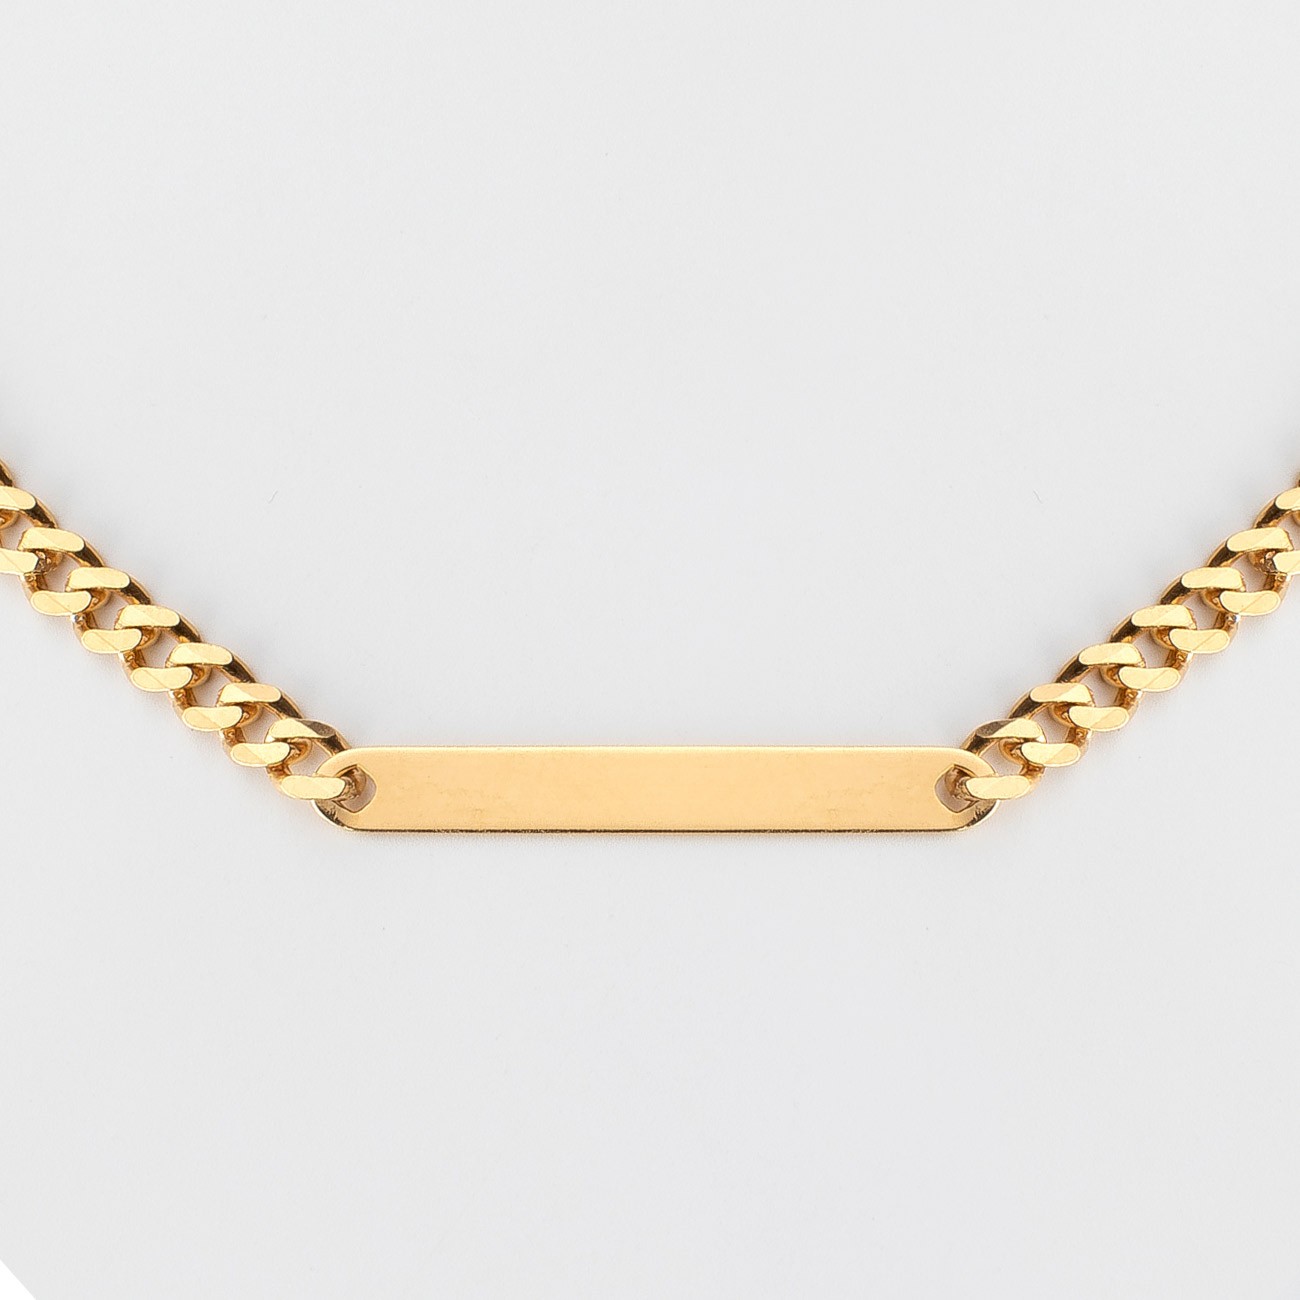 Men's necklace rectangular tag pendant curb chain 925